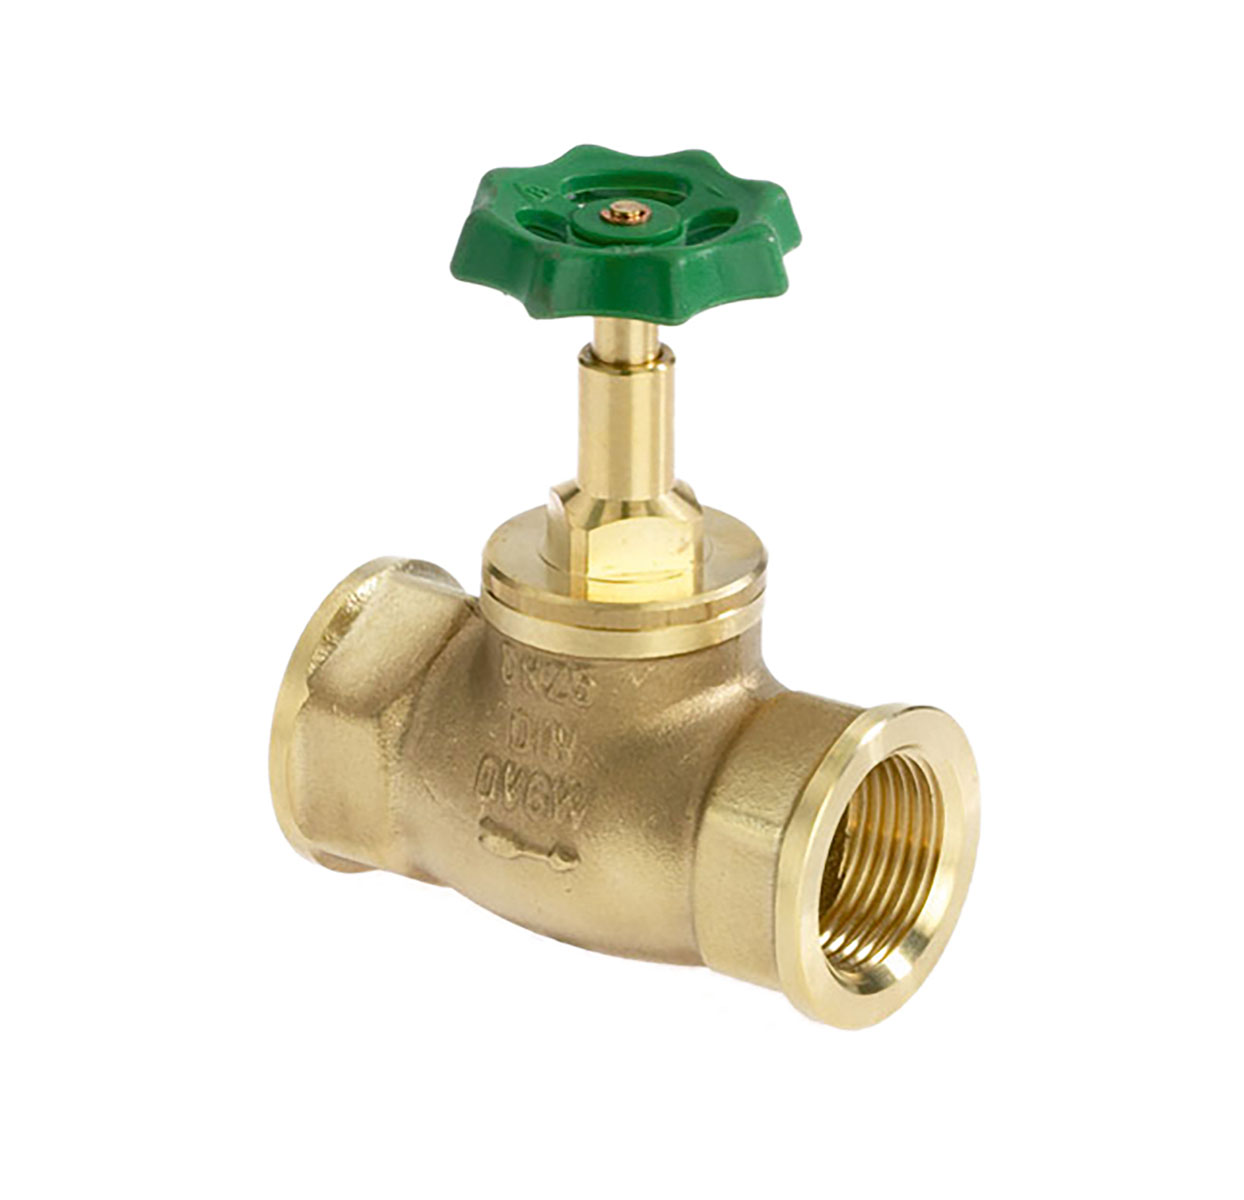 1300320 - CR-Brass Globe valve without drain valve, rising